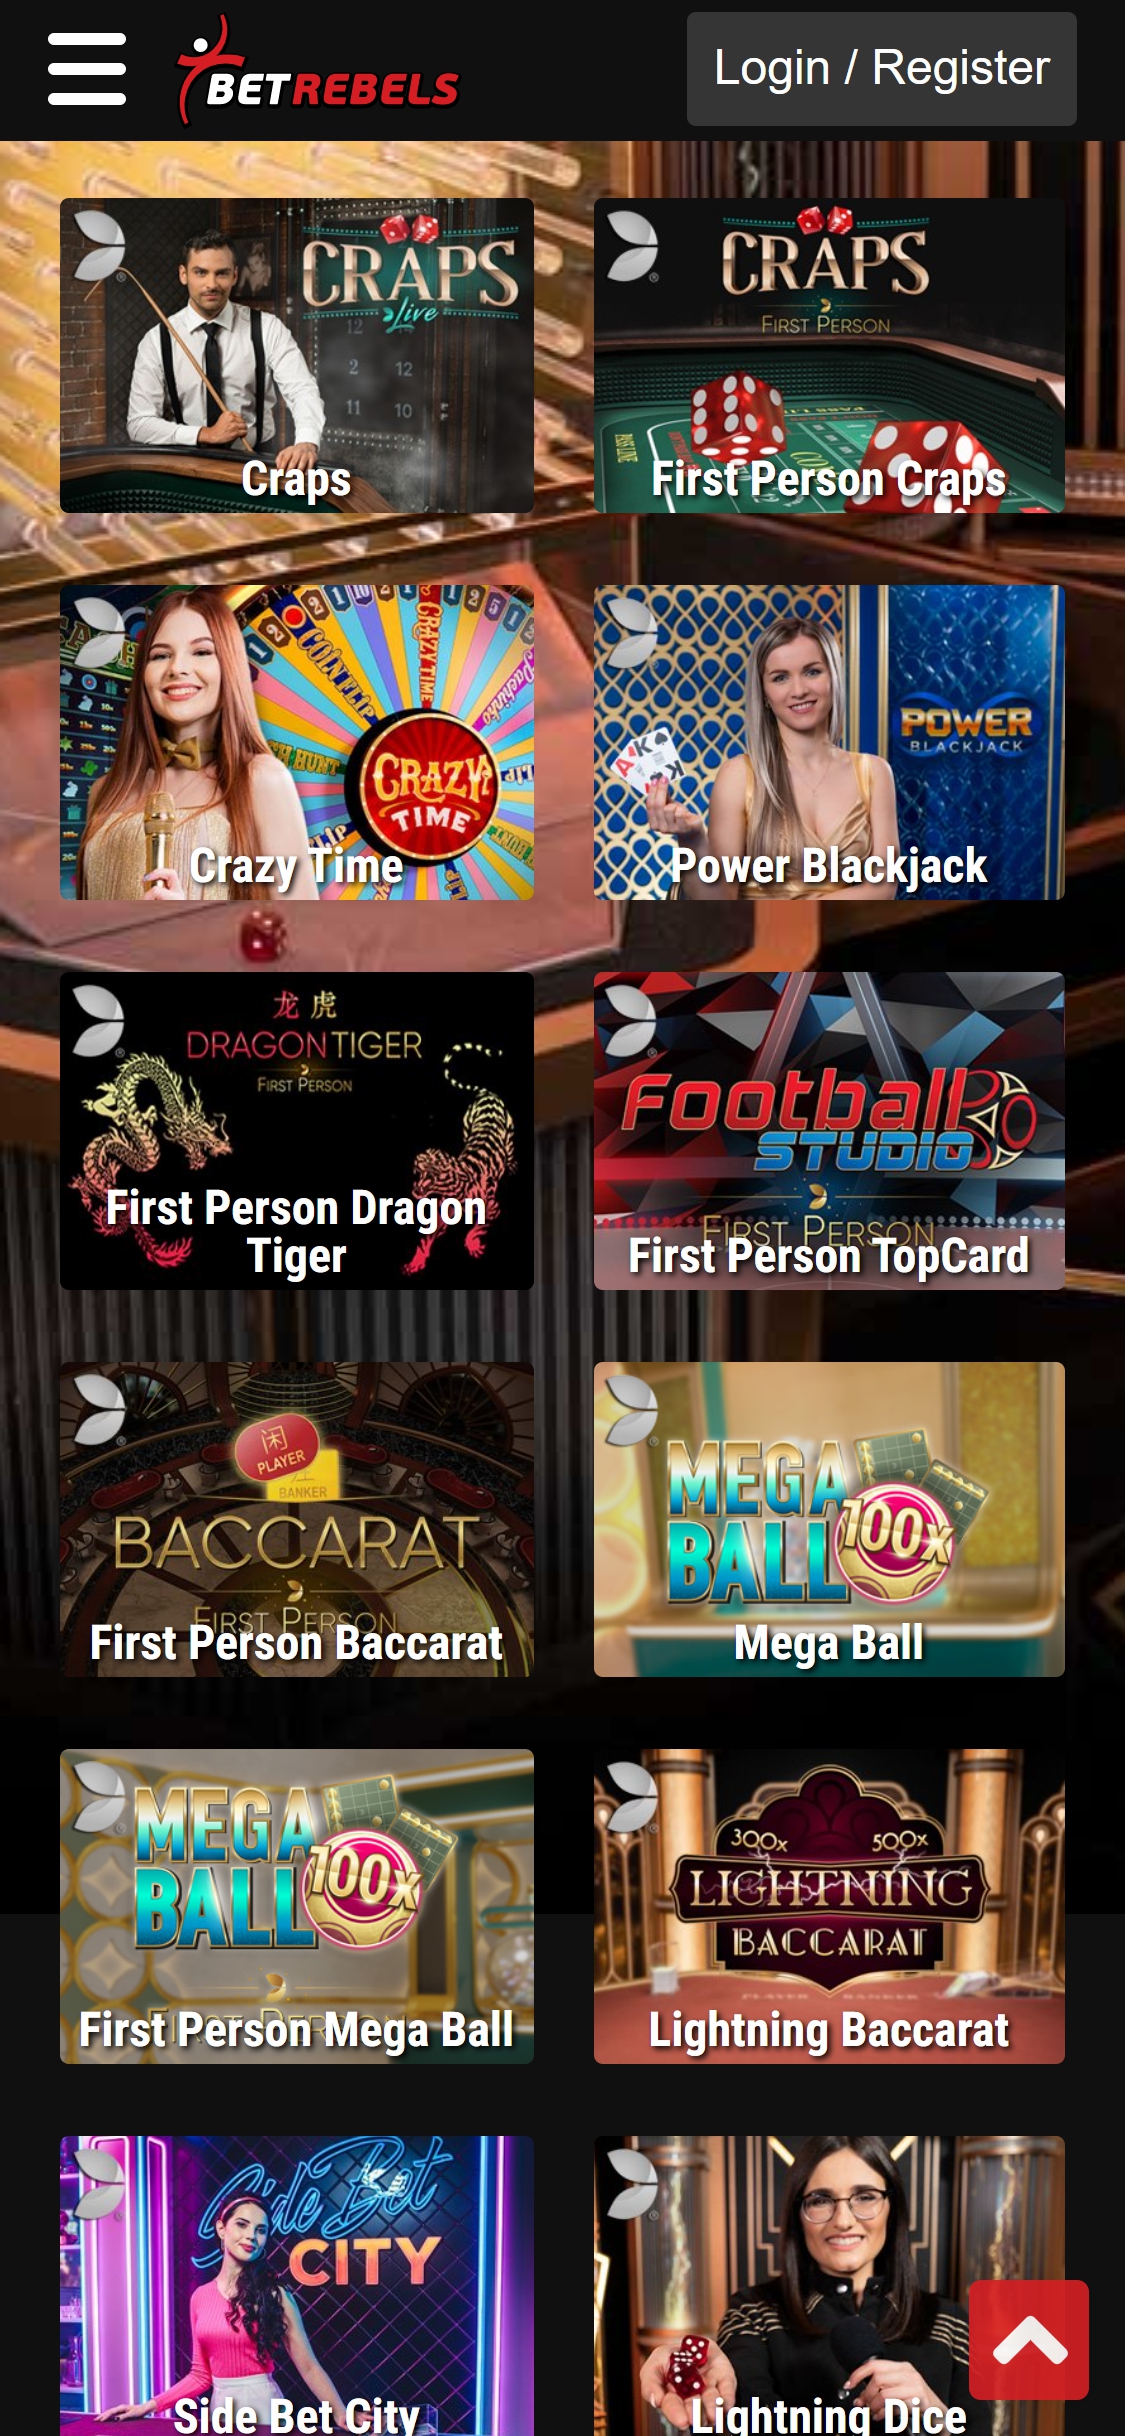 BetRebels Casino Mobile Live Dealer Games Review